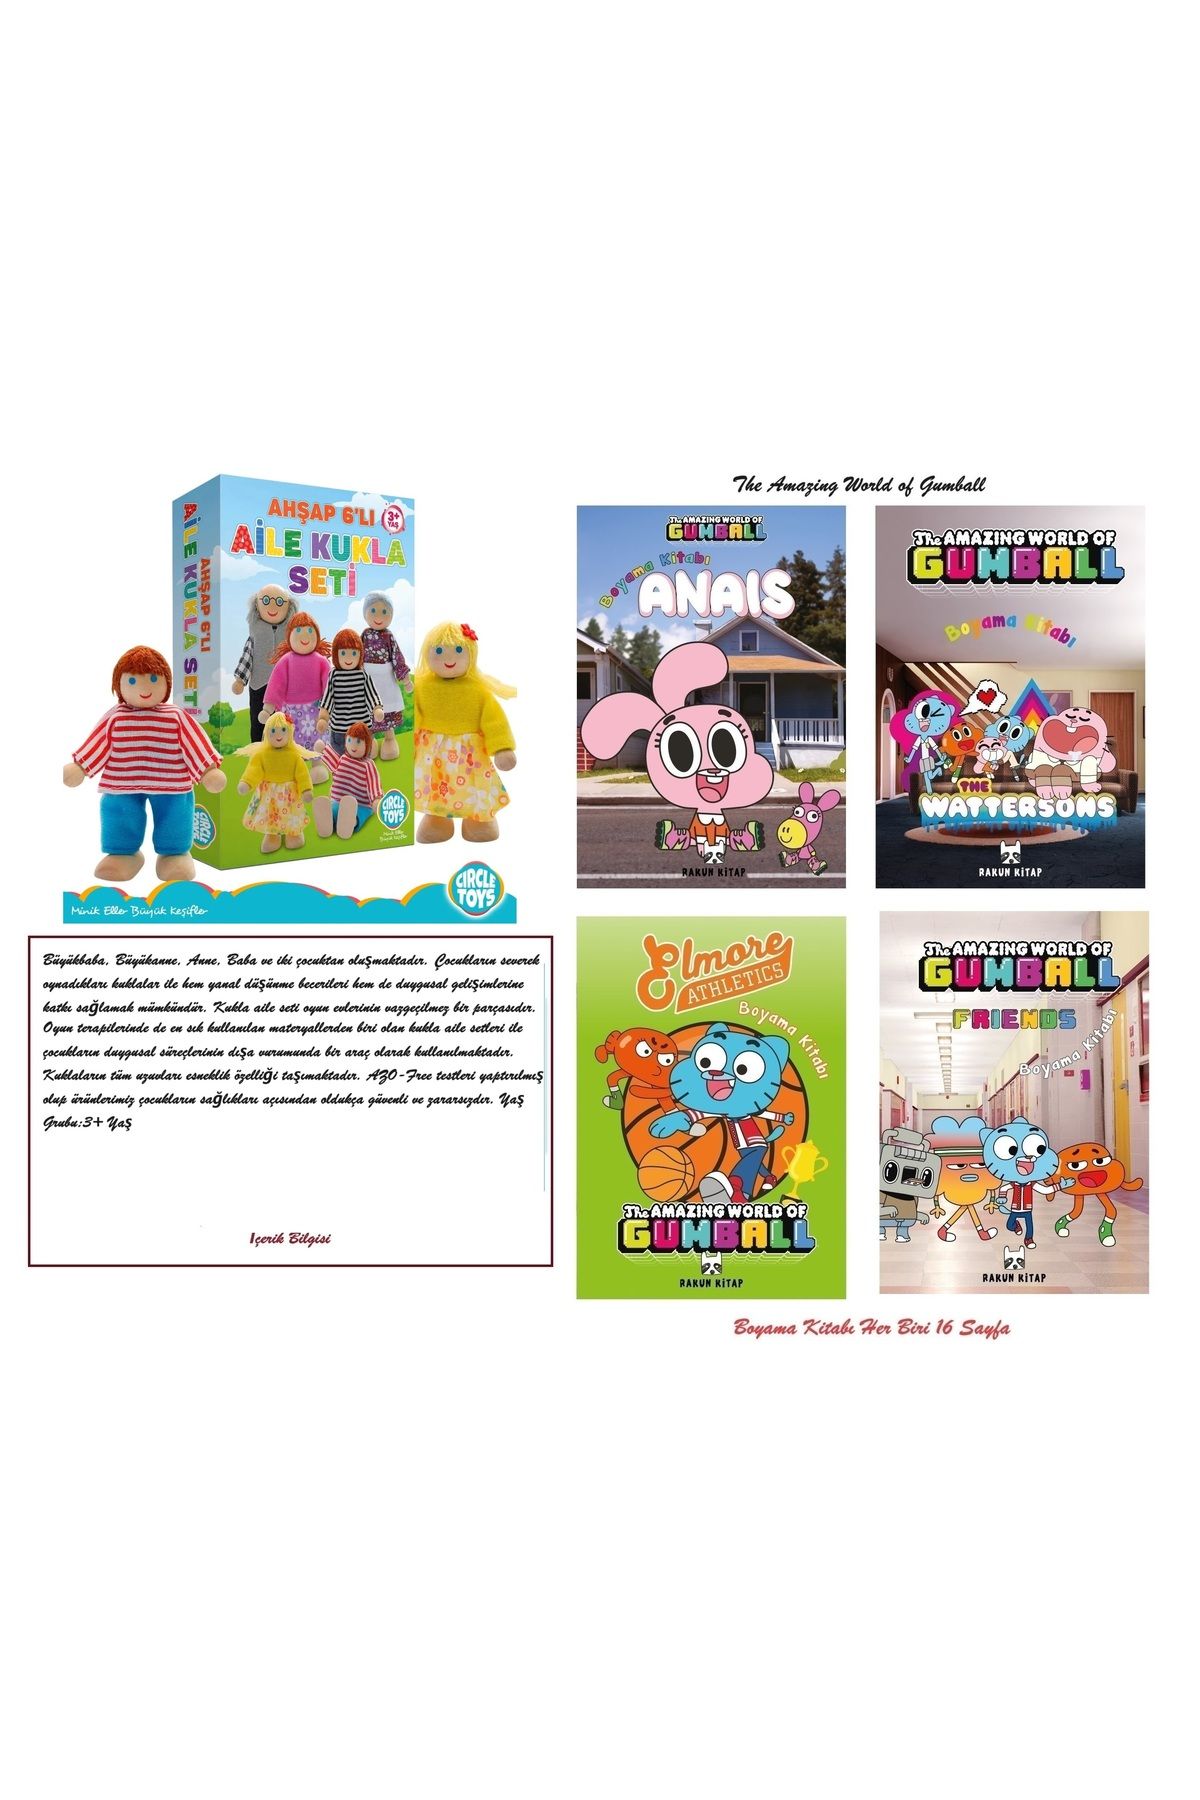 Circle Toys Ahşap 6'lı Aile Kukla Seti ve The Amazing World of Gumball Carton Network 4 Adet Boyama Kitabı Hediy